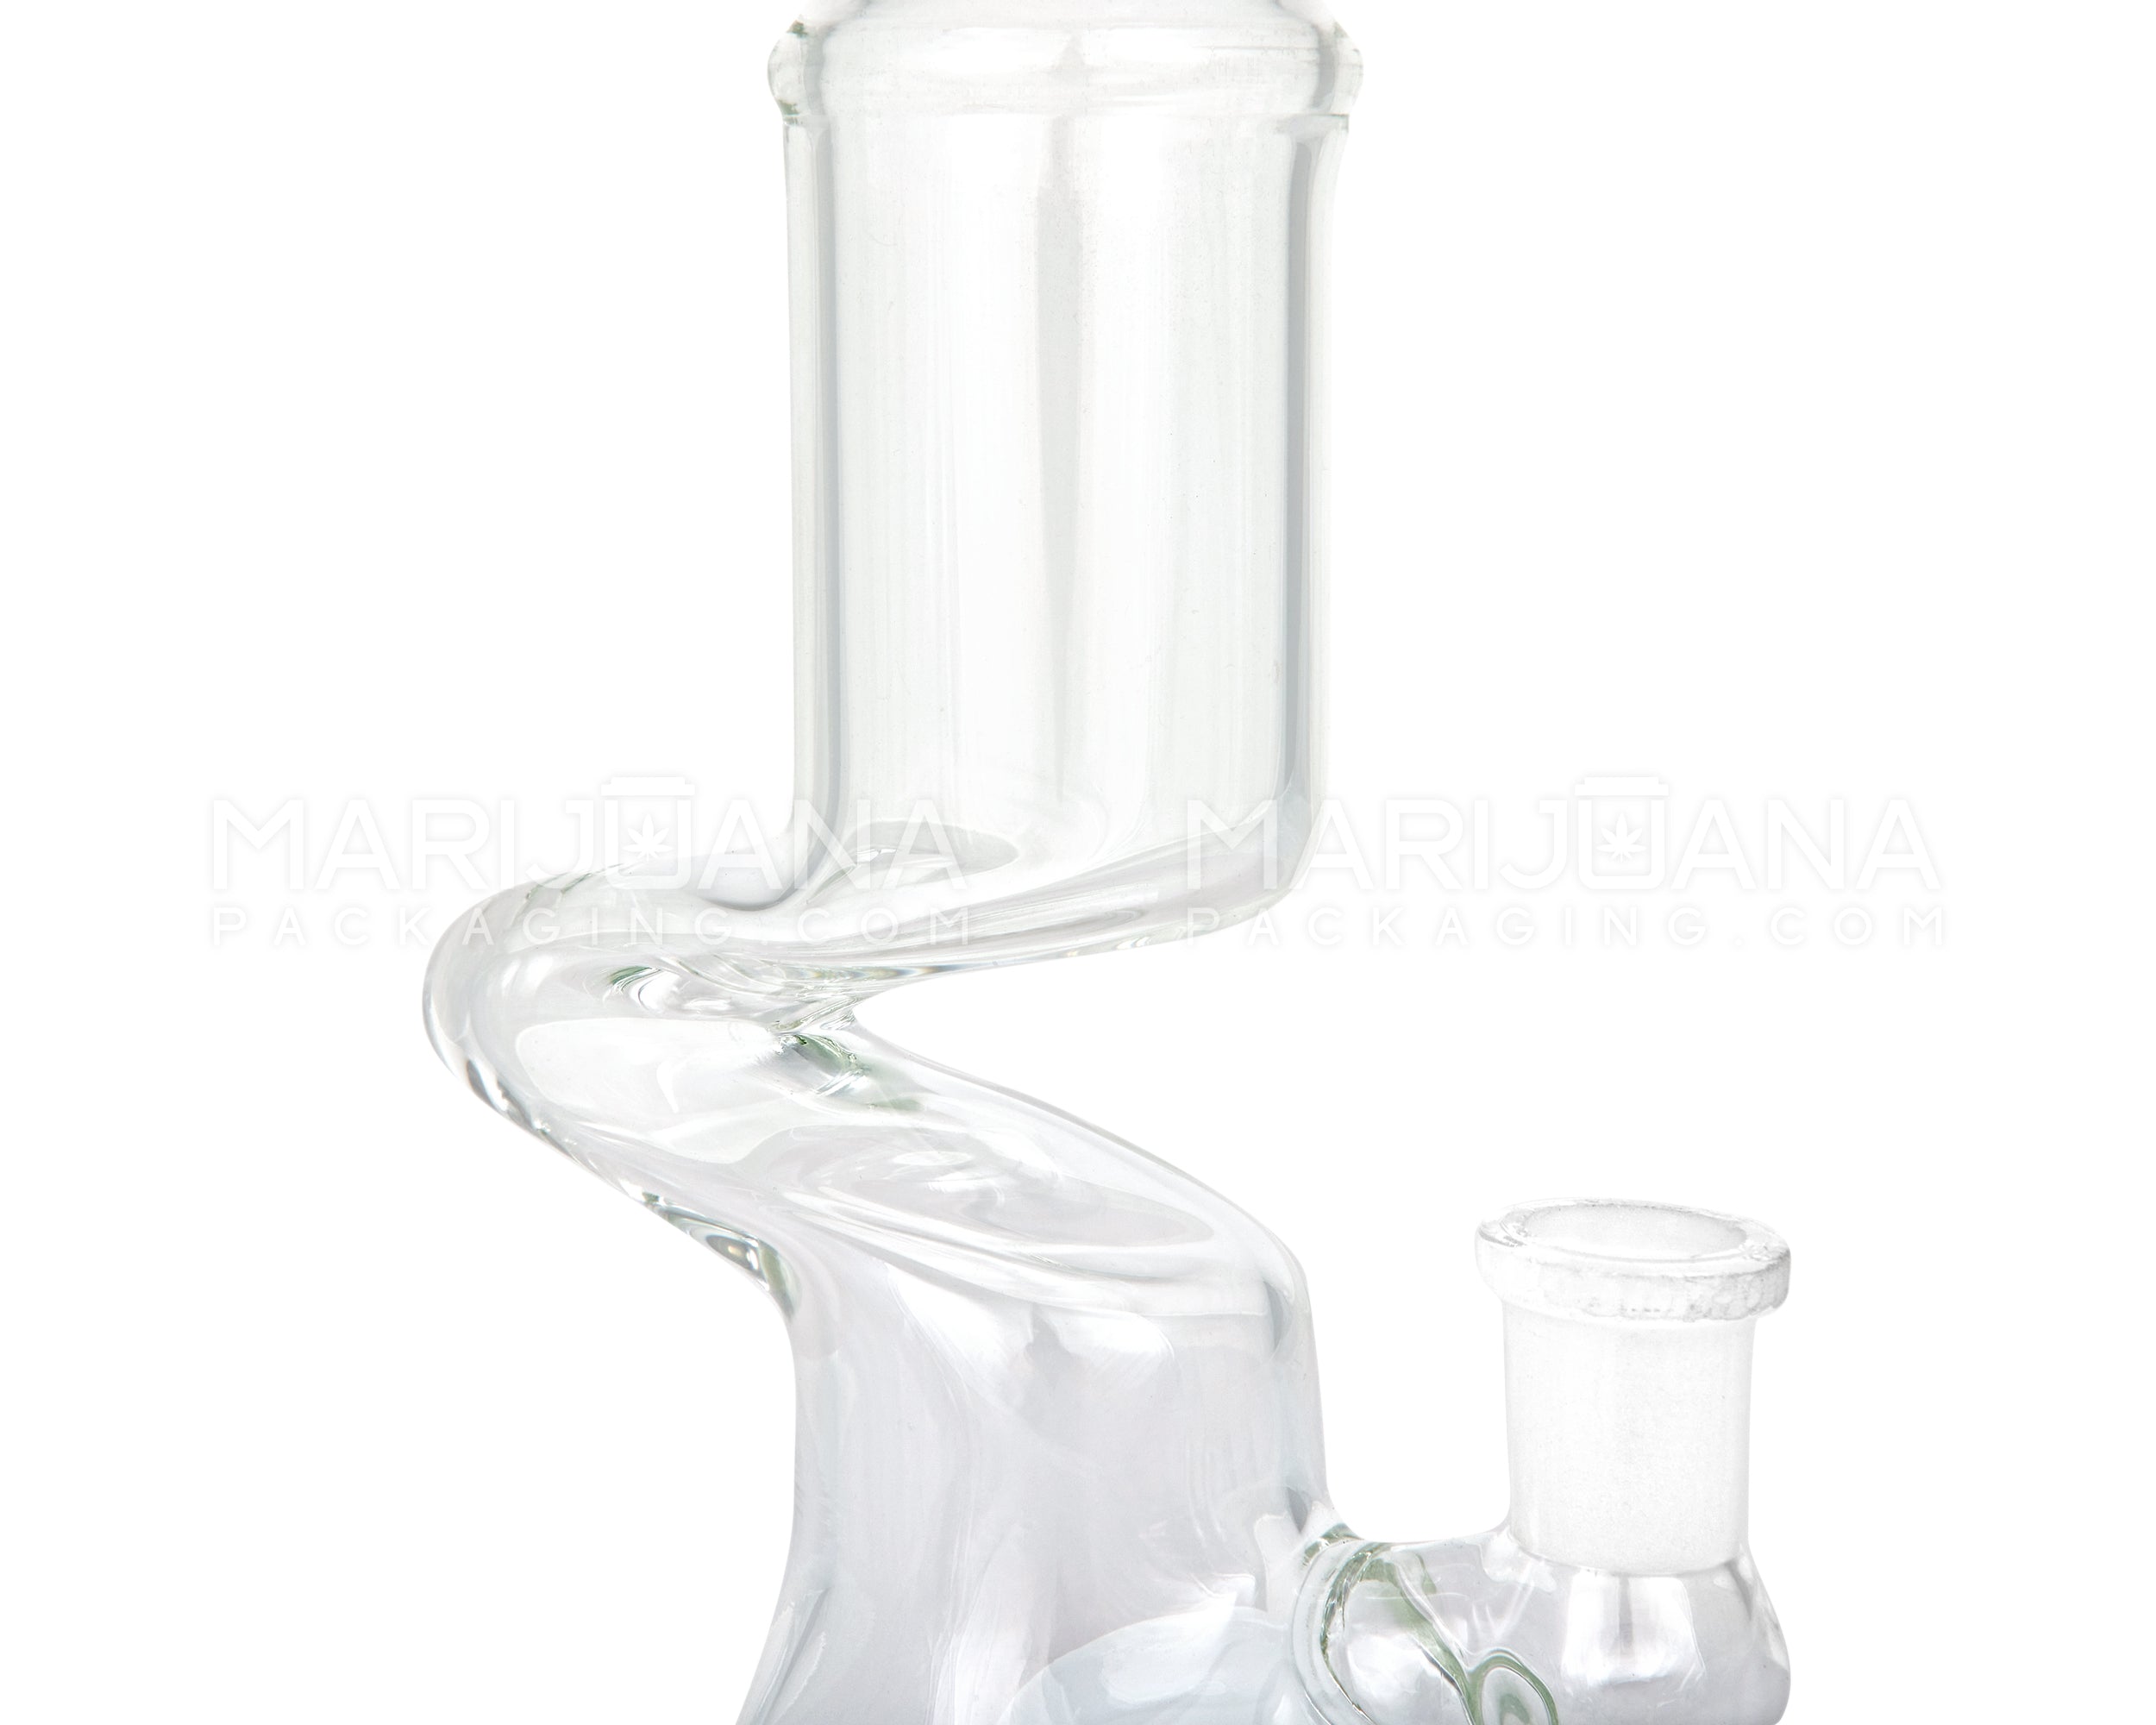 Z-Neck Atomic Perc Glass Beaker Water Pipe | 7in Tall - 14mm Bowl - White - 4